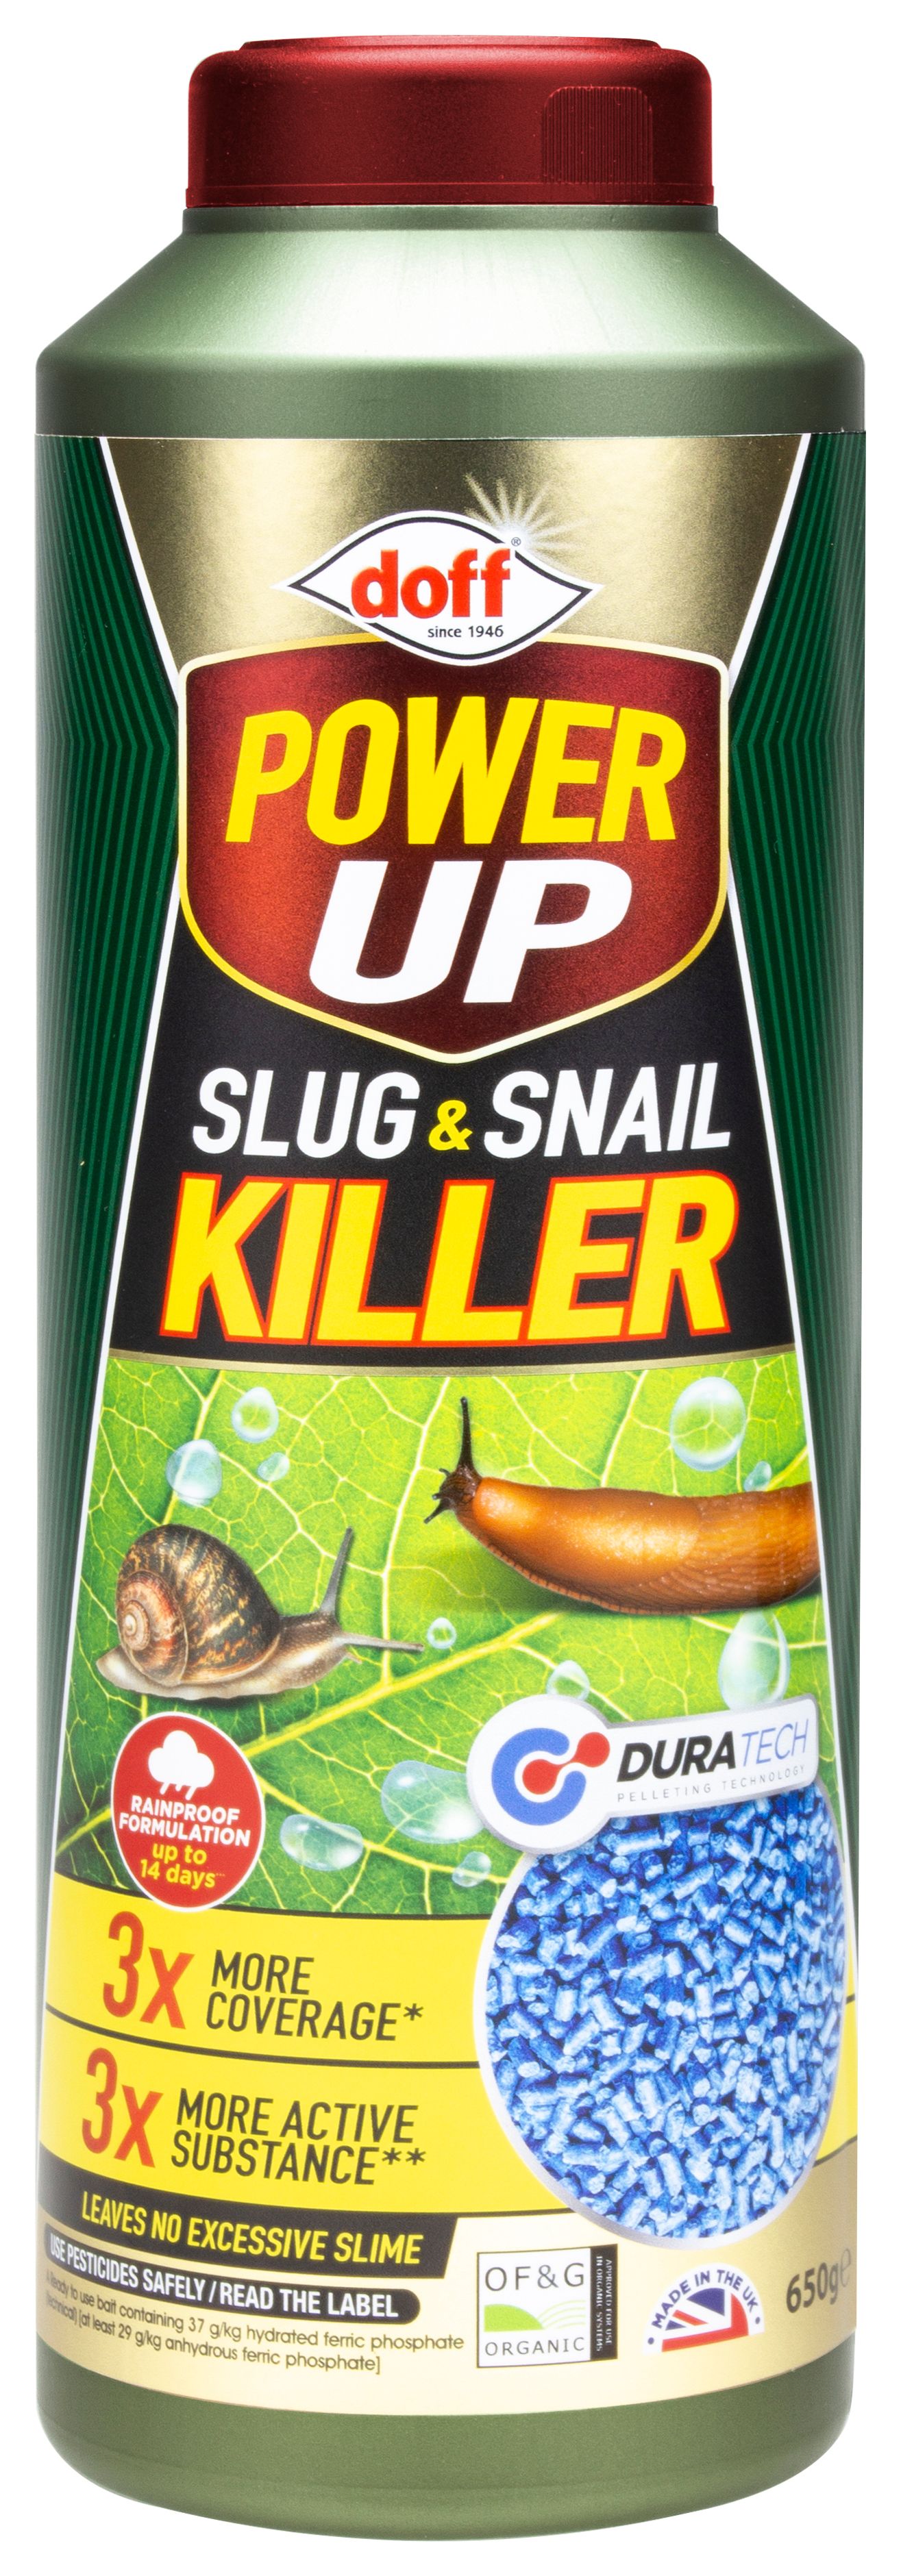 Image of Doff Power Up Slug & Snail Killer - 650g